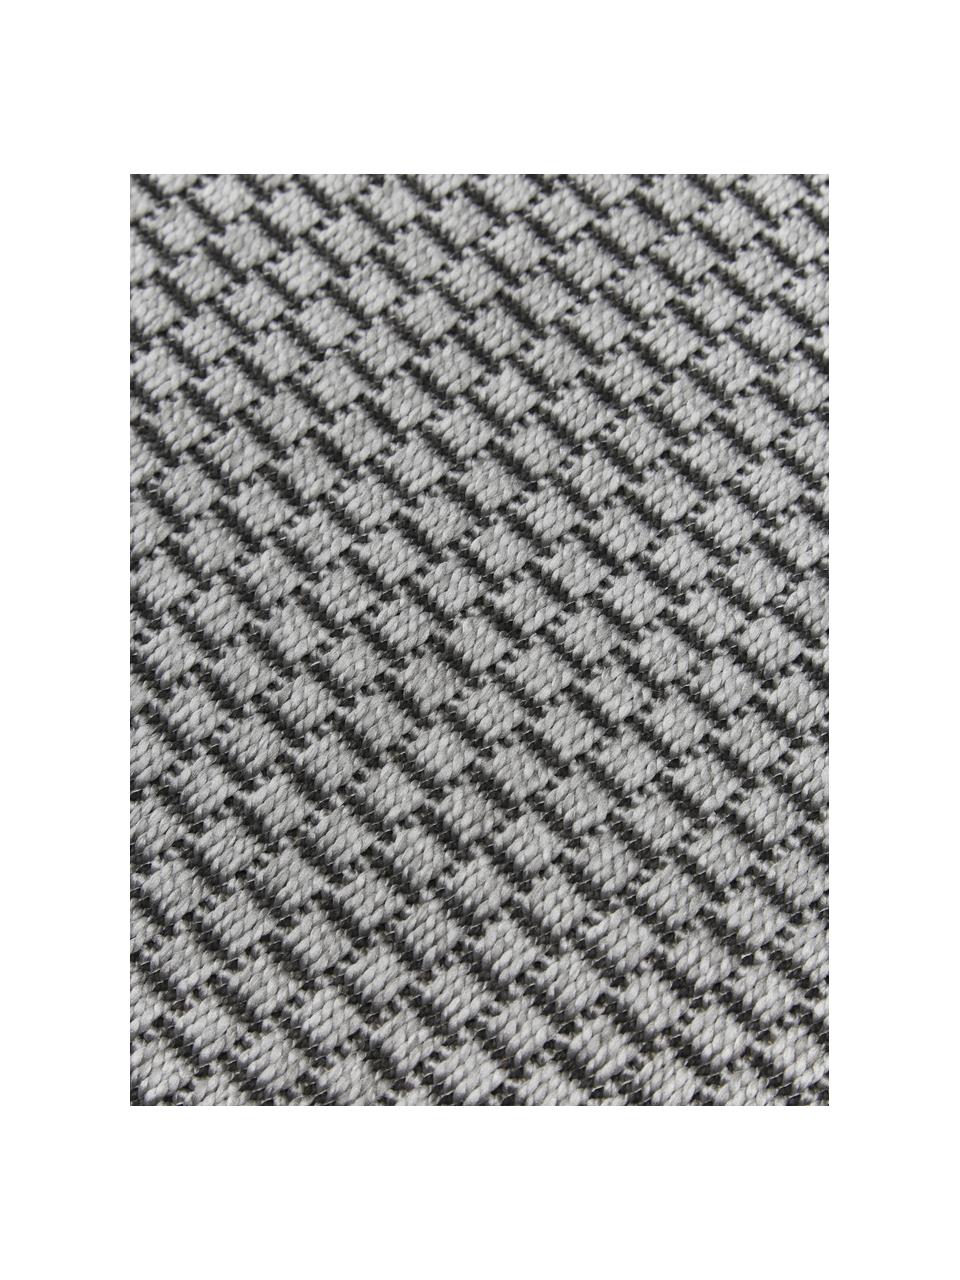 Ovaler In- & Outdoor-Teppich Toronto in Grau, 100% Polypropylen, Grau, B 160 x L 230 cm (Grösse M)